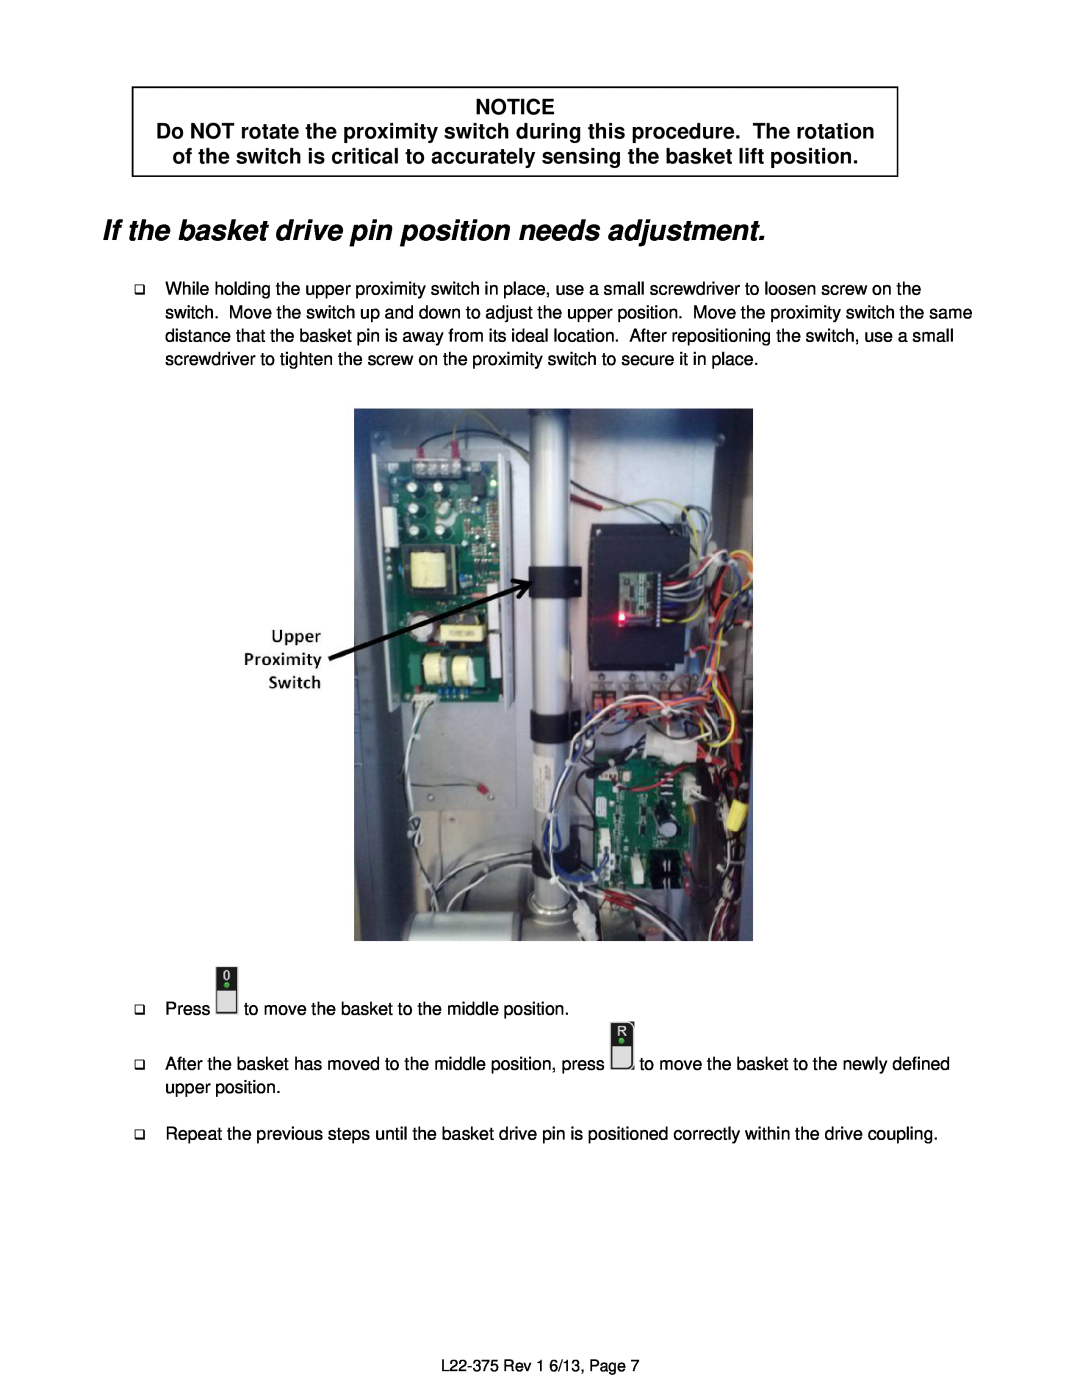 Pitco Frialator L22-375 Rev 1 6/13 manual If the basket drive pin position needs adjustment 